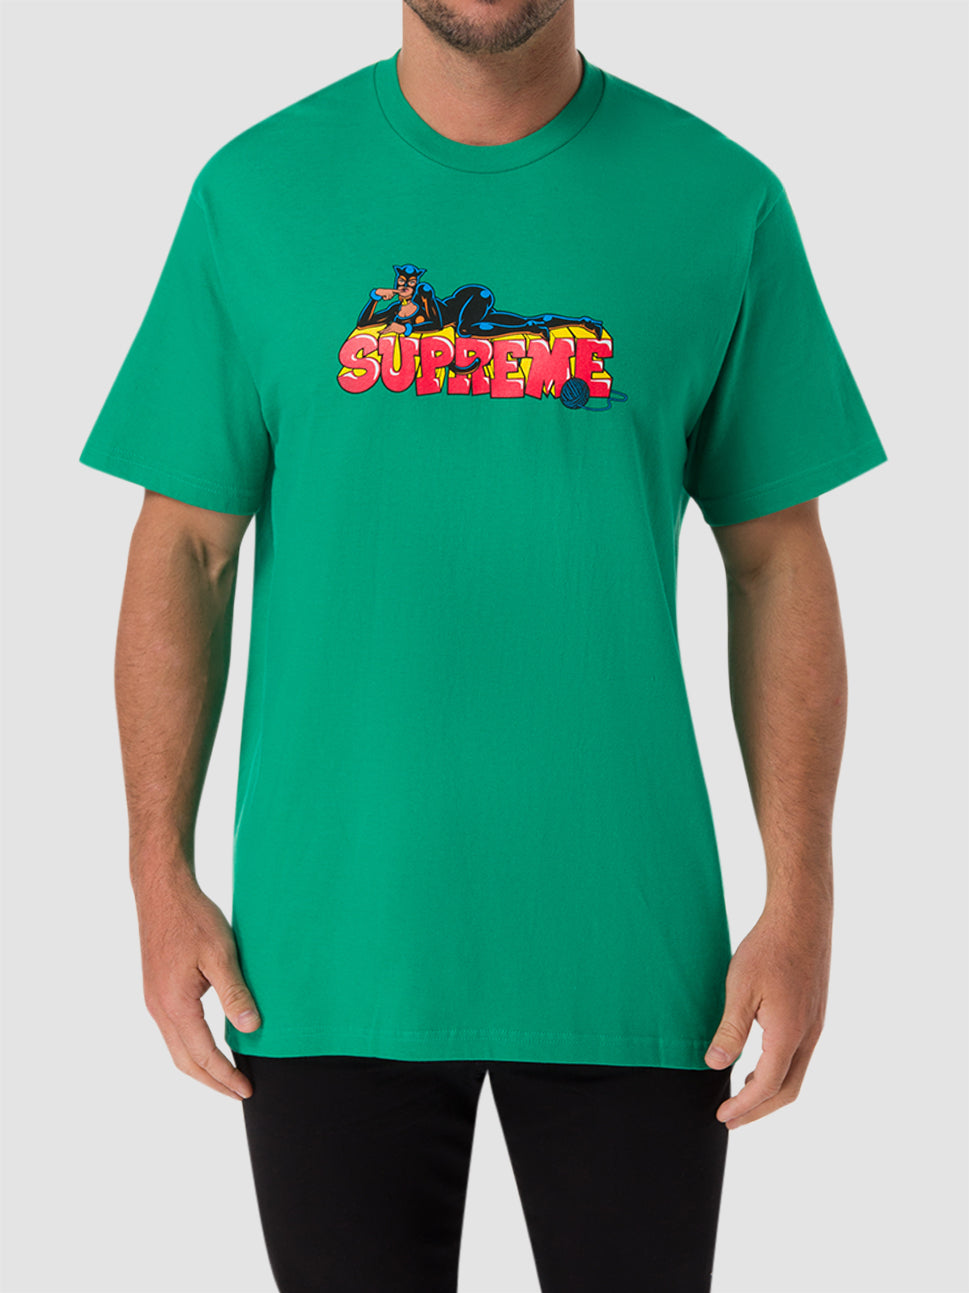 Shop latest trending Green color Supreme T-Shirts & Tops Online in UAE, Streetwear & Lifestyle Apparel Online for Men, Women, Kids